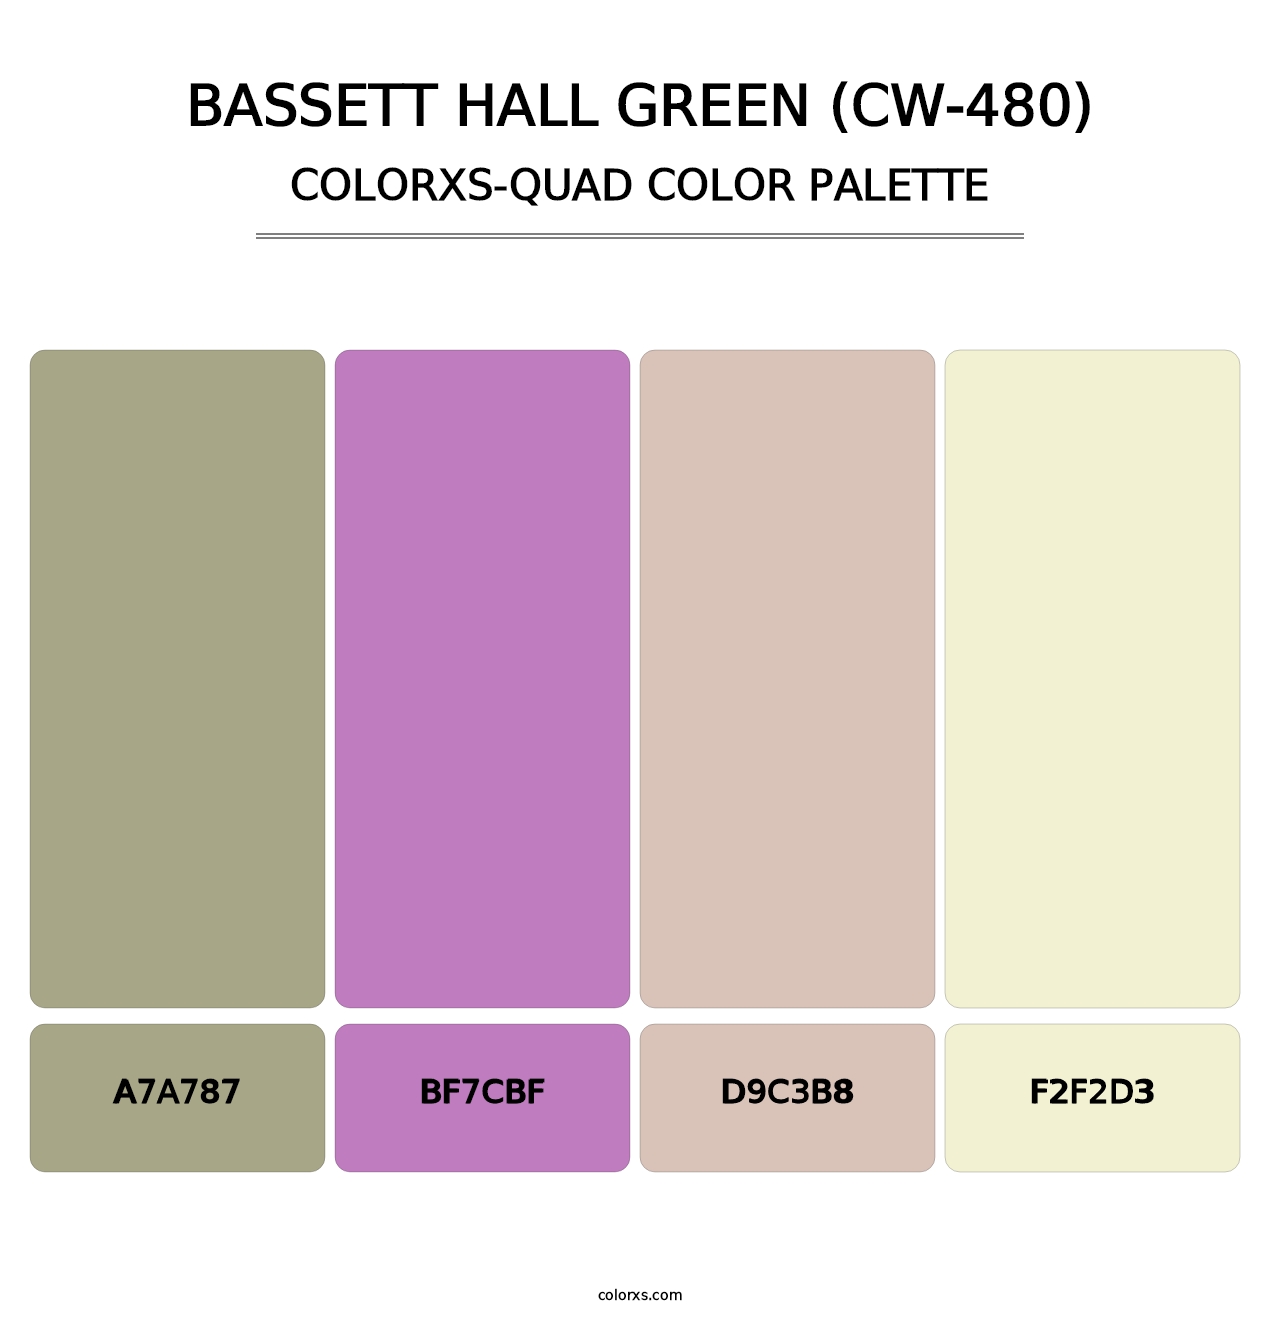 Bassett Hall Green (CW-480) - Colorxs Quad Palette